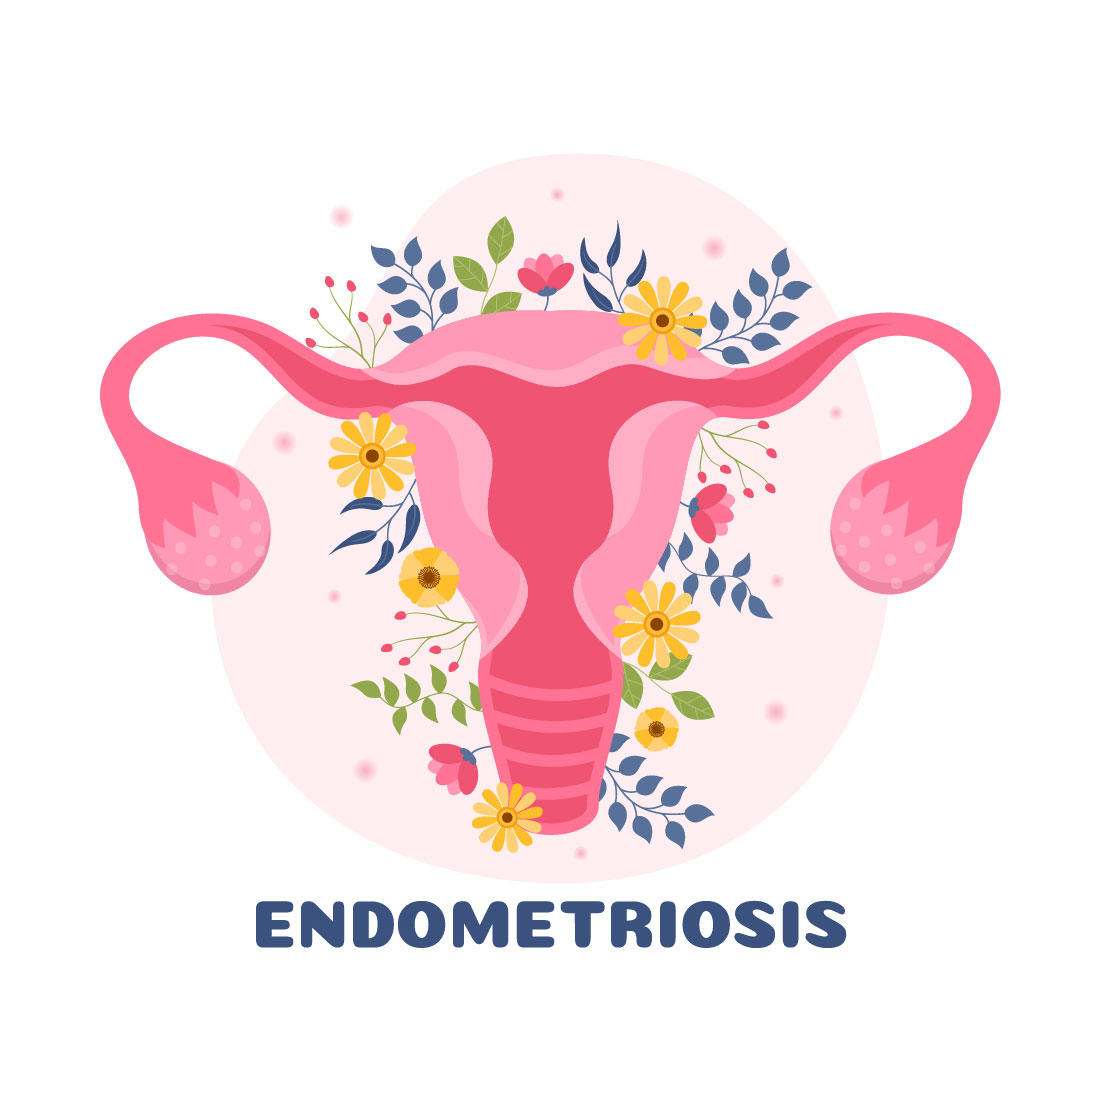 Endometriosis Illustration cover image.